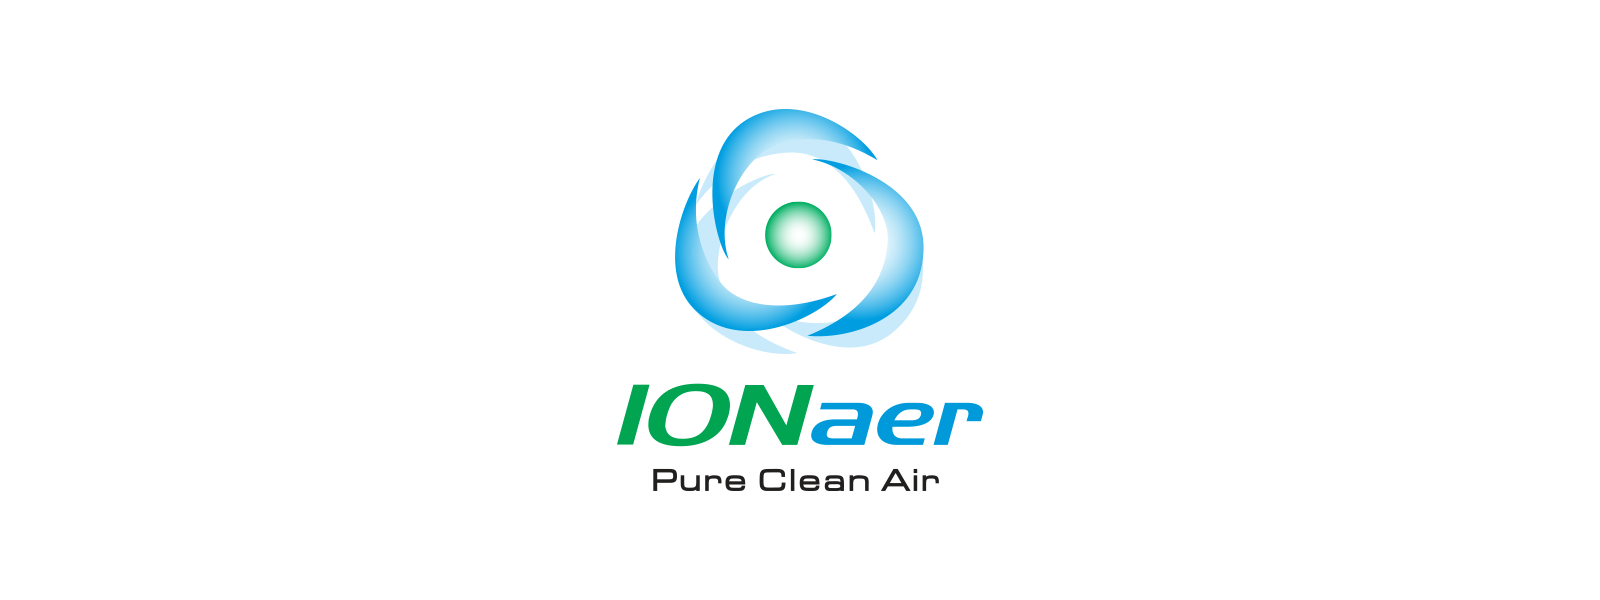 IONaer logo